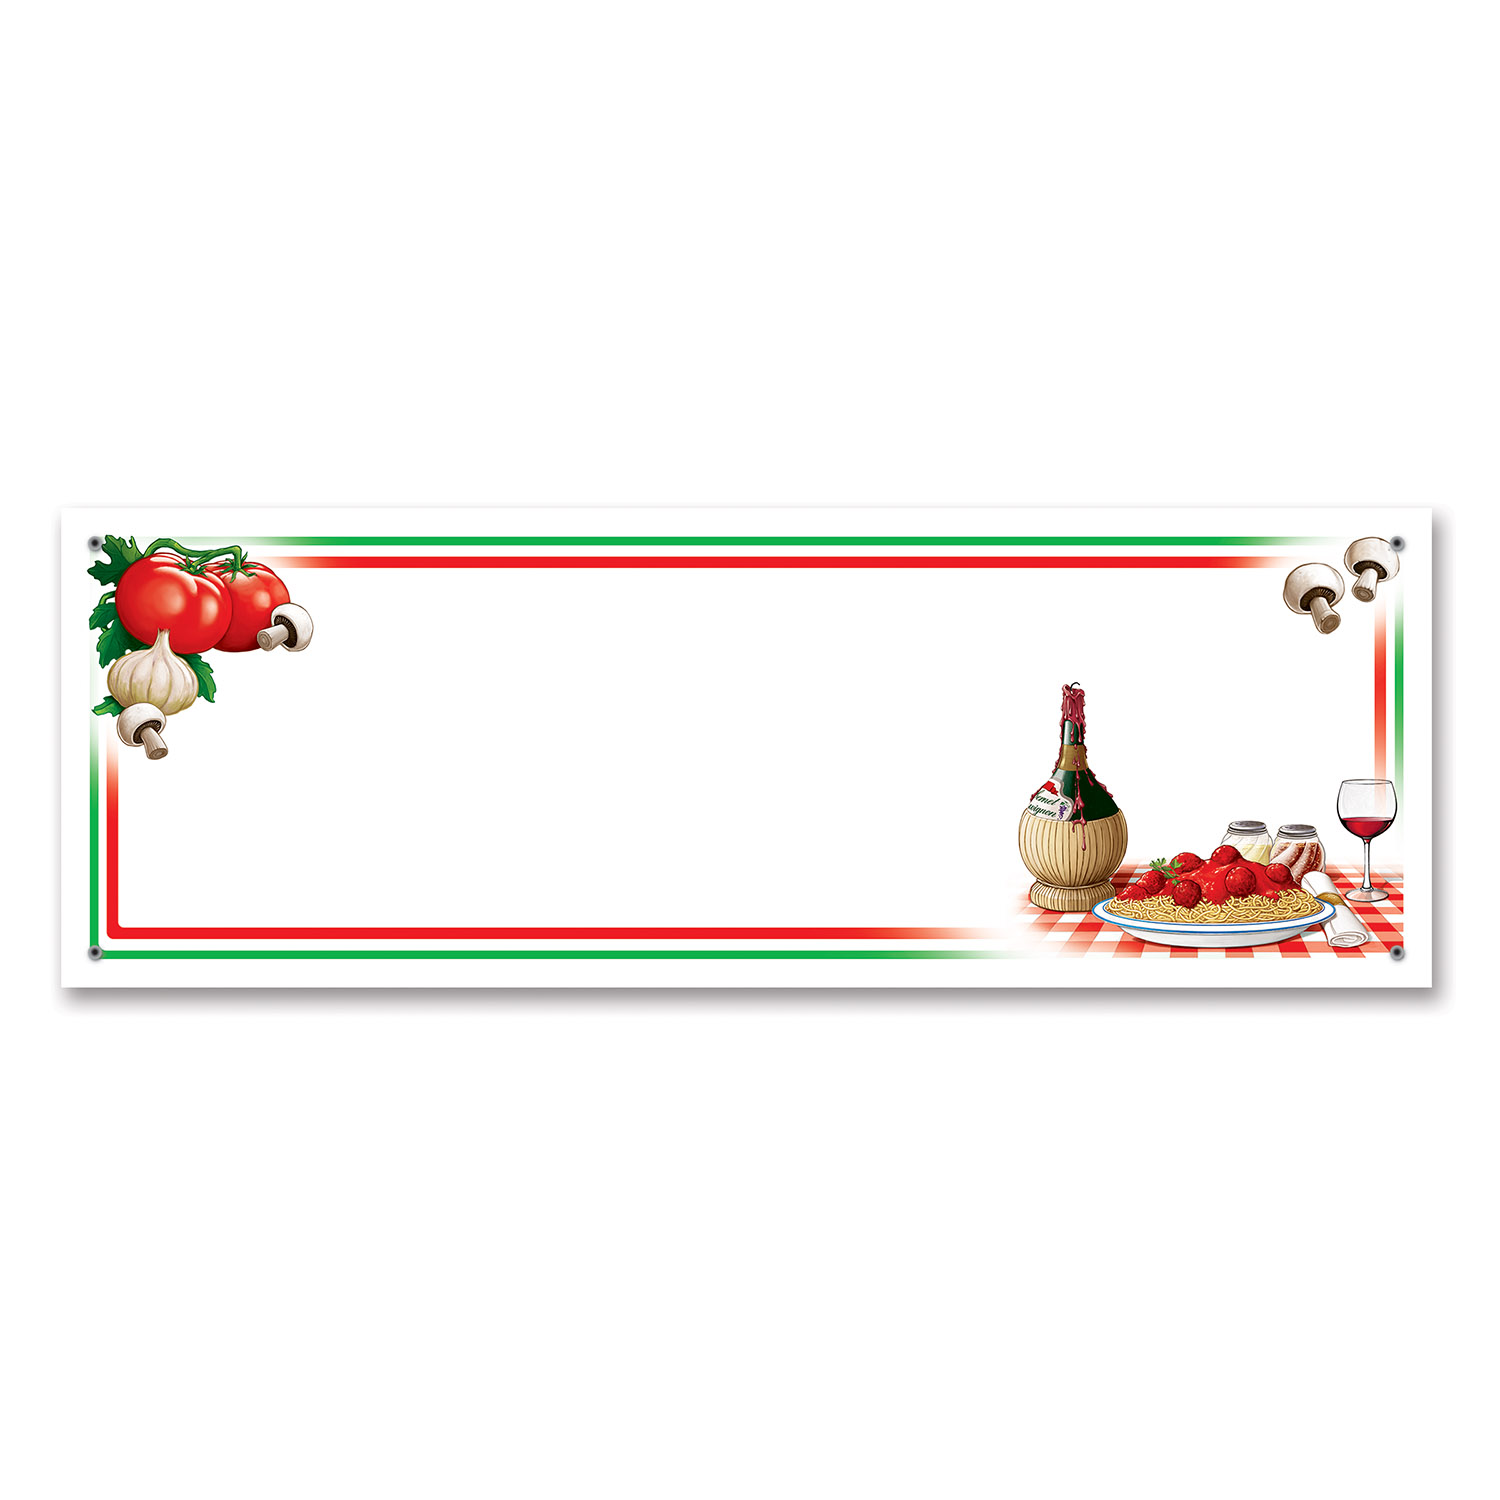 Italian Night SIGN Banner